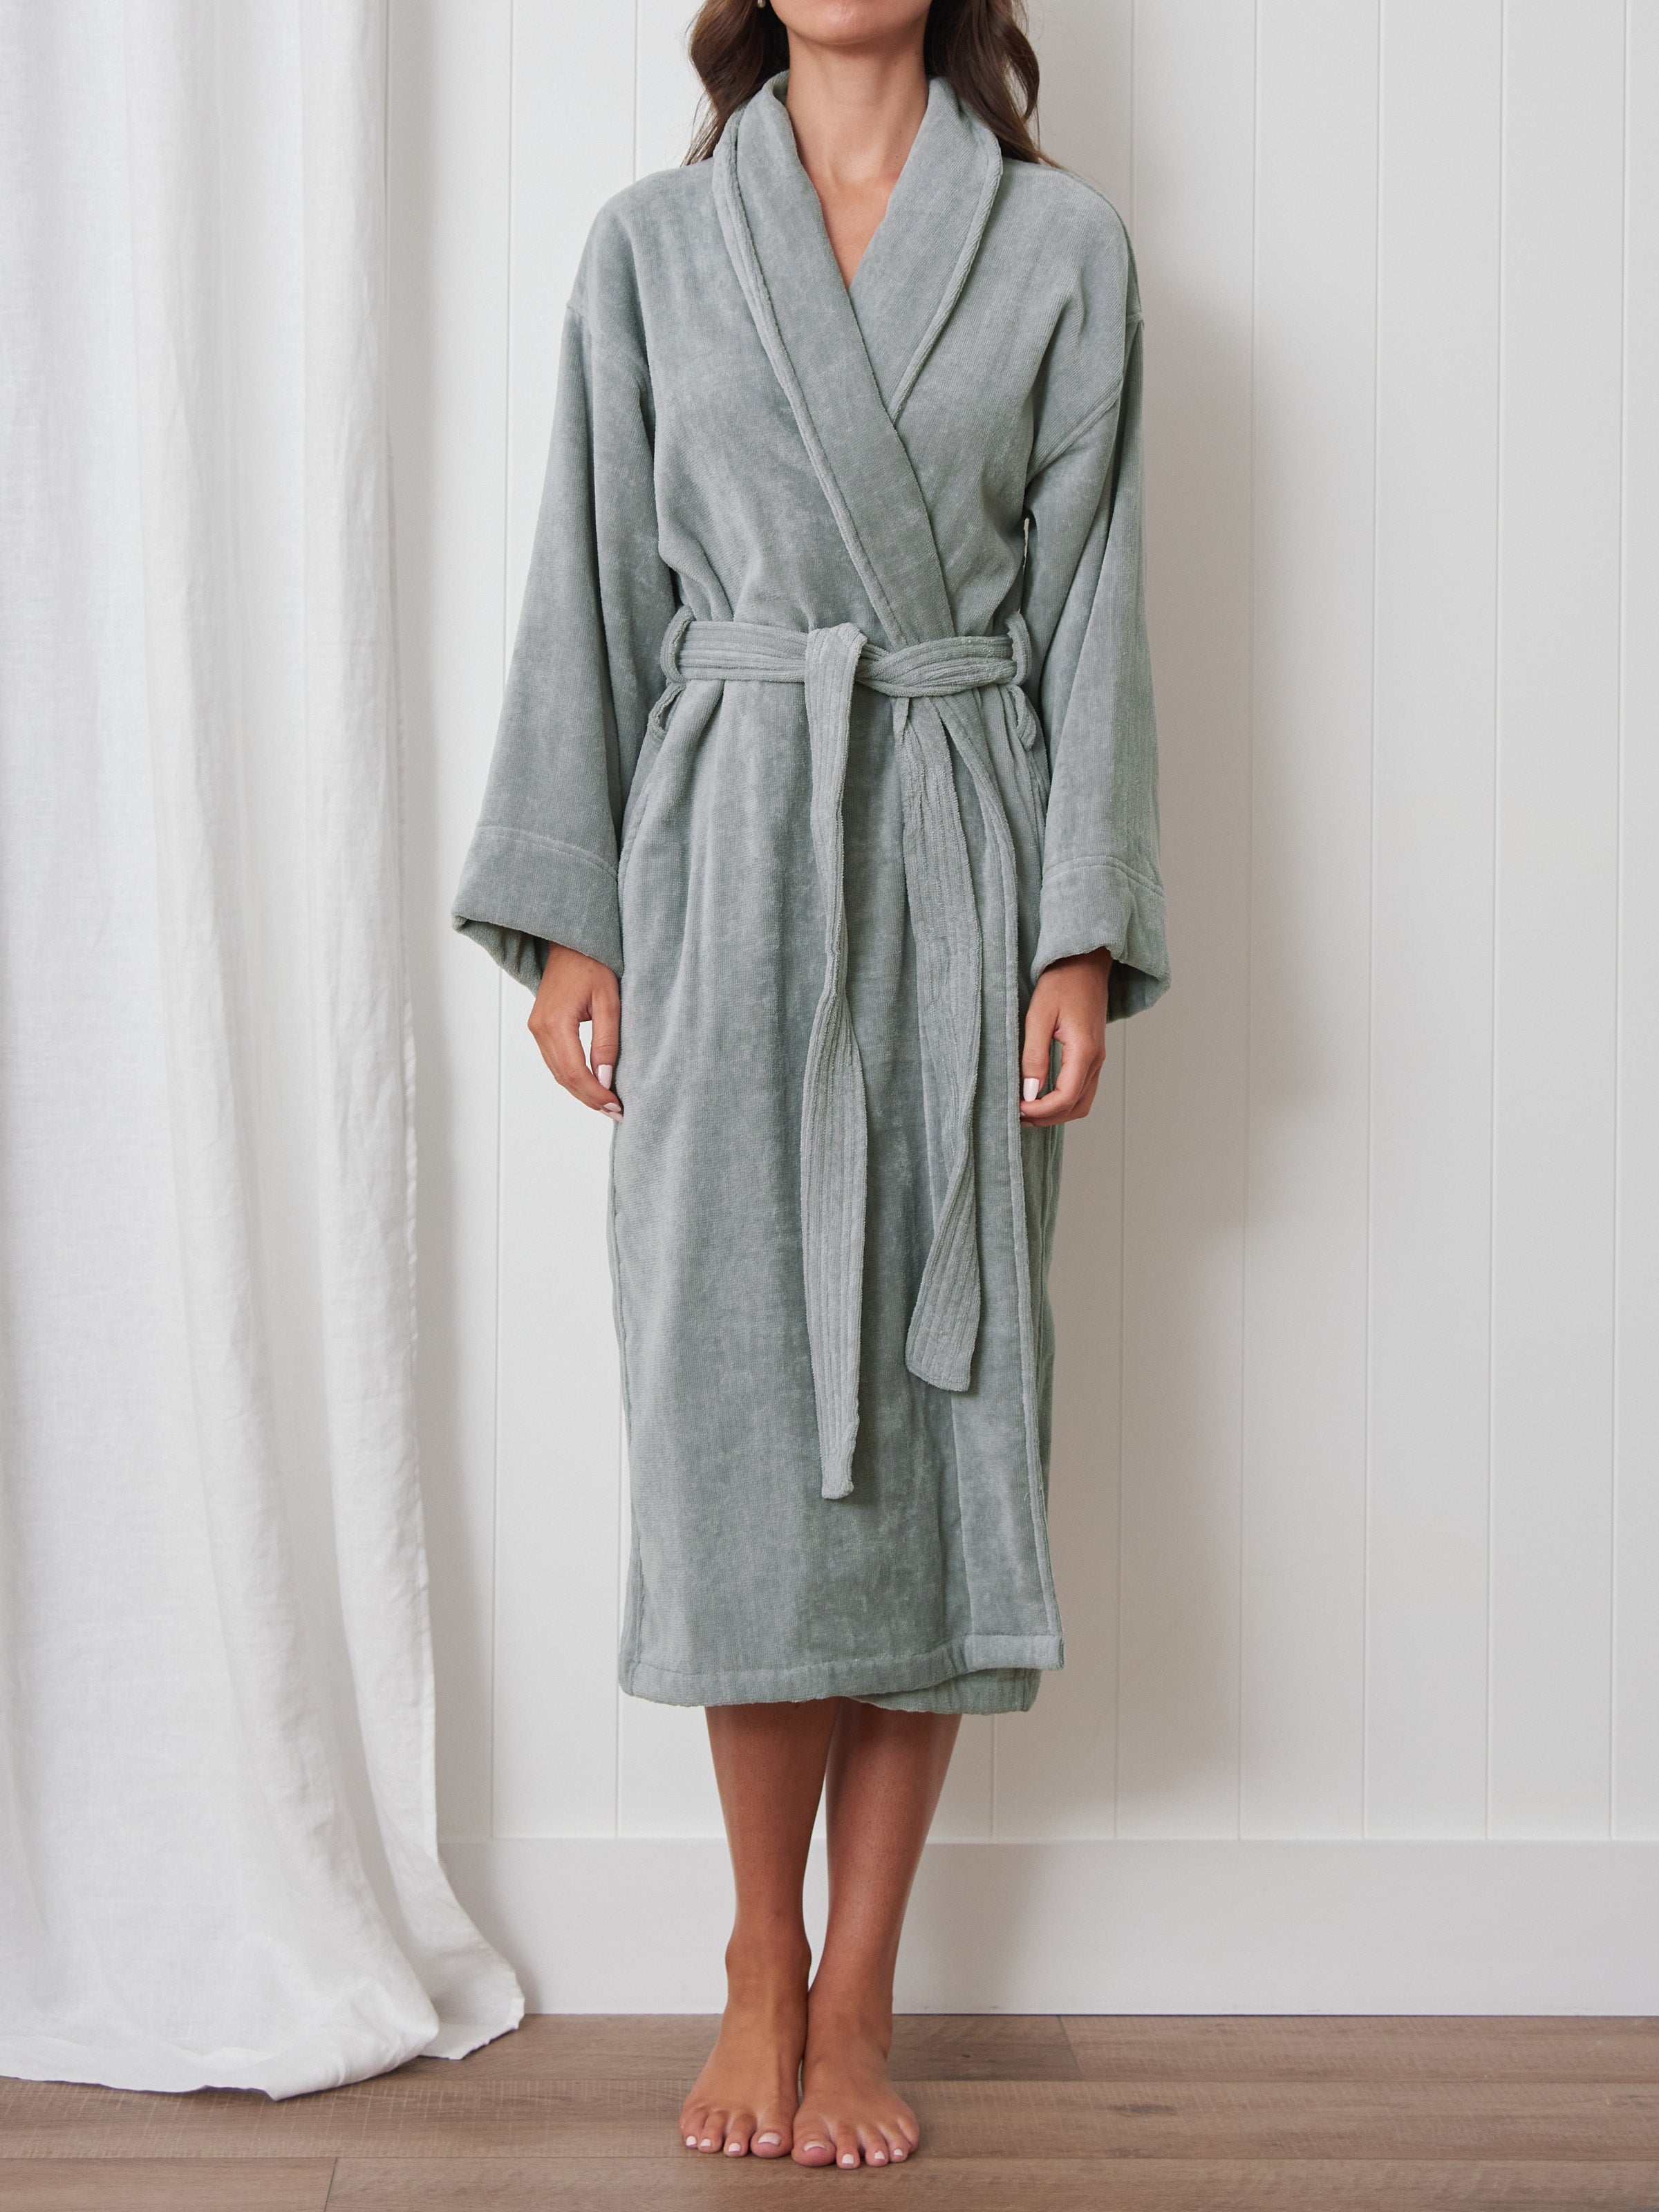 Bath Robe Grey Dressing Gown for Women Men Solid Cotton Waffle Bathrobe  Peignoir Nightgowns Sleepwear Bridesmaid Robes